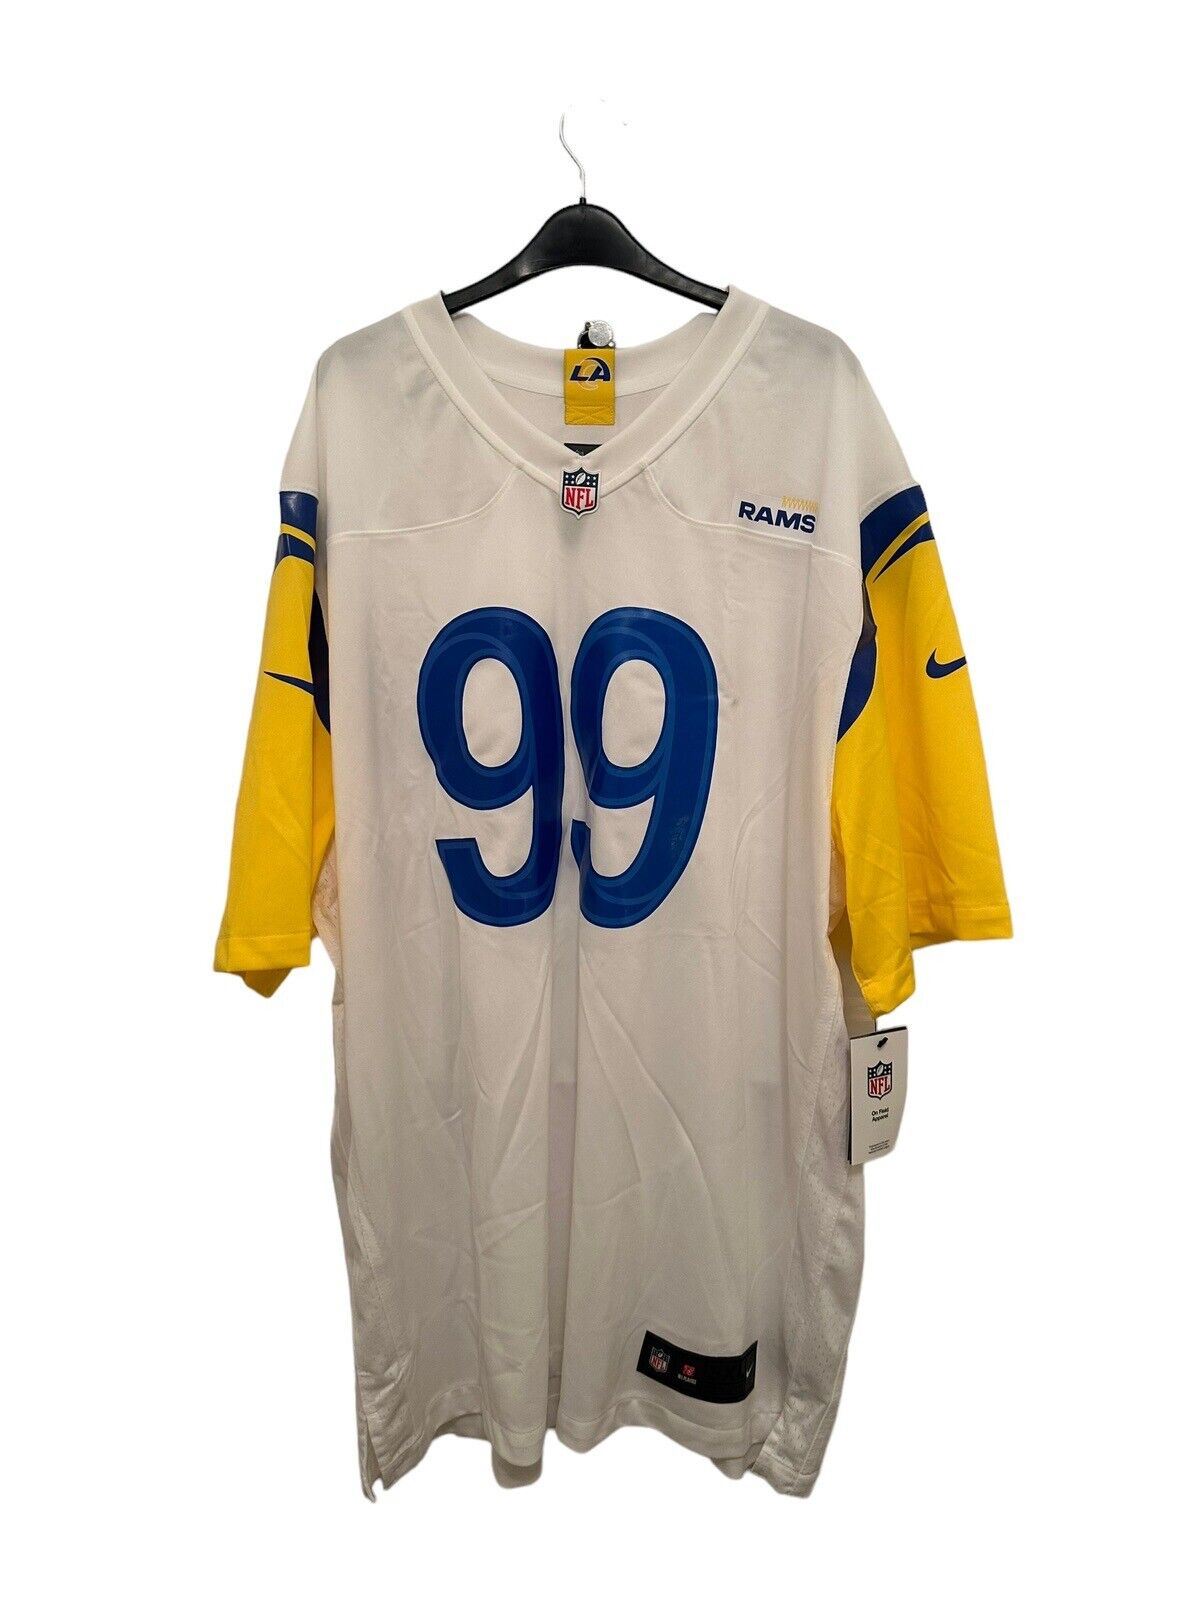 Nike NFL Los Angeles Rams Alternate Jersey  - DONALD 99 - Mens Size 3XL